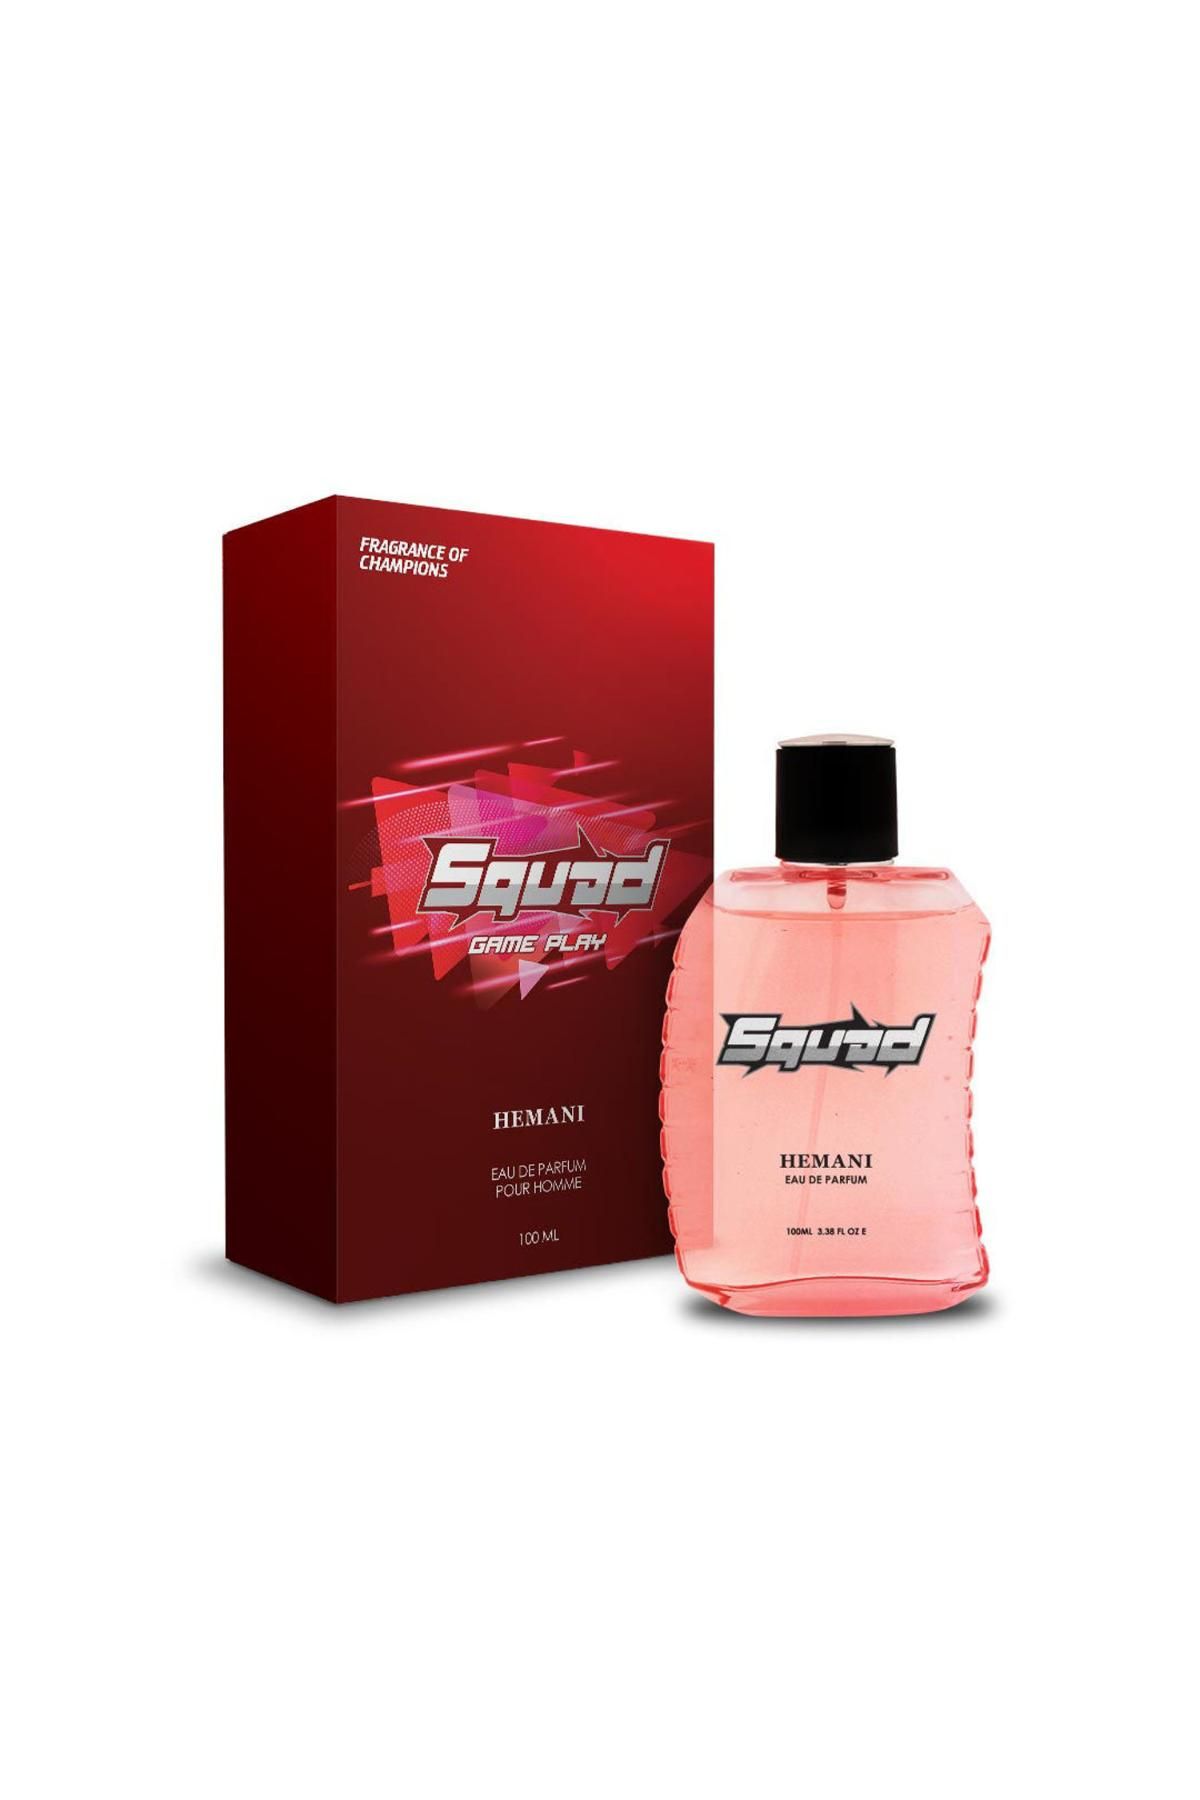 Hemani Squad Perfume Gameplay for Men